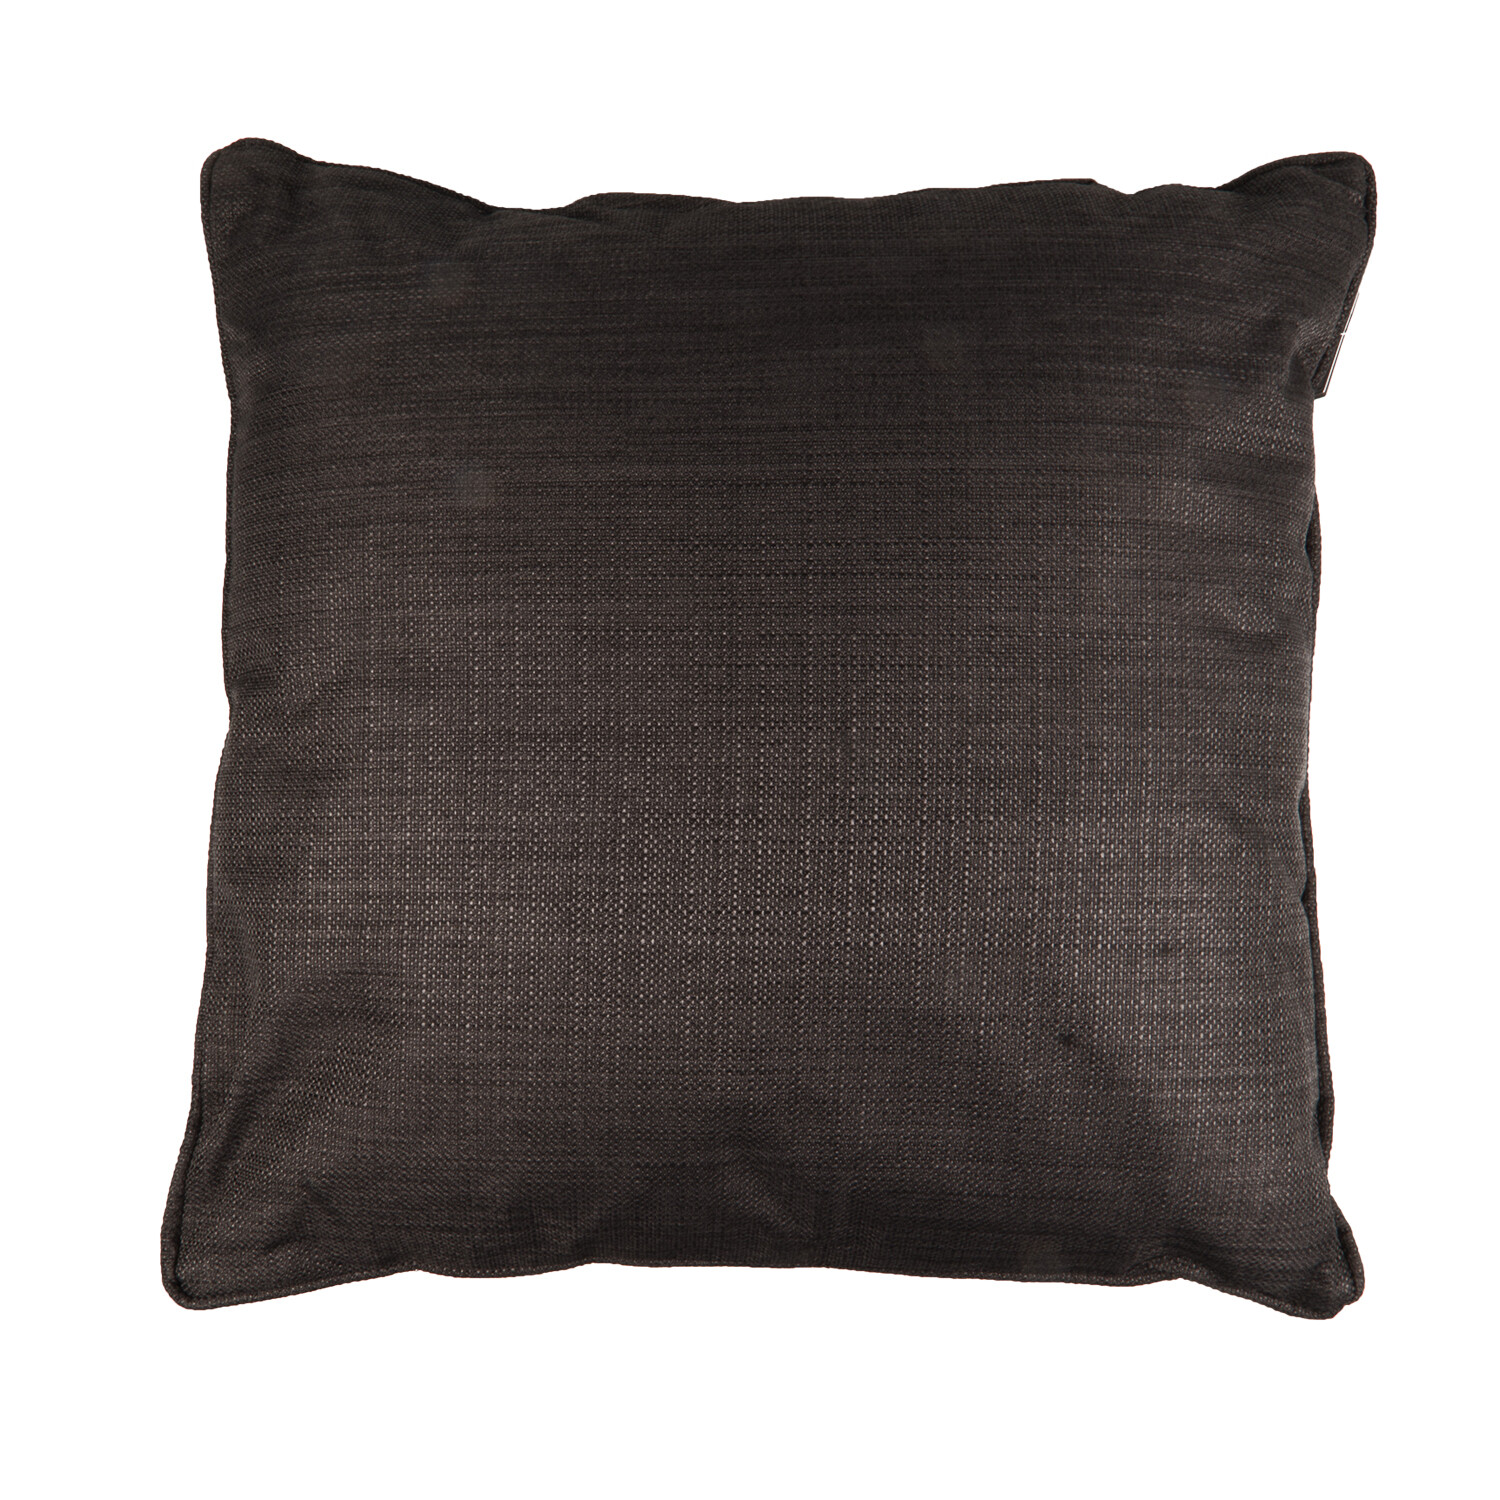 Divante Charcoal Hoxton Cushion 45 x 45cm Image